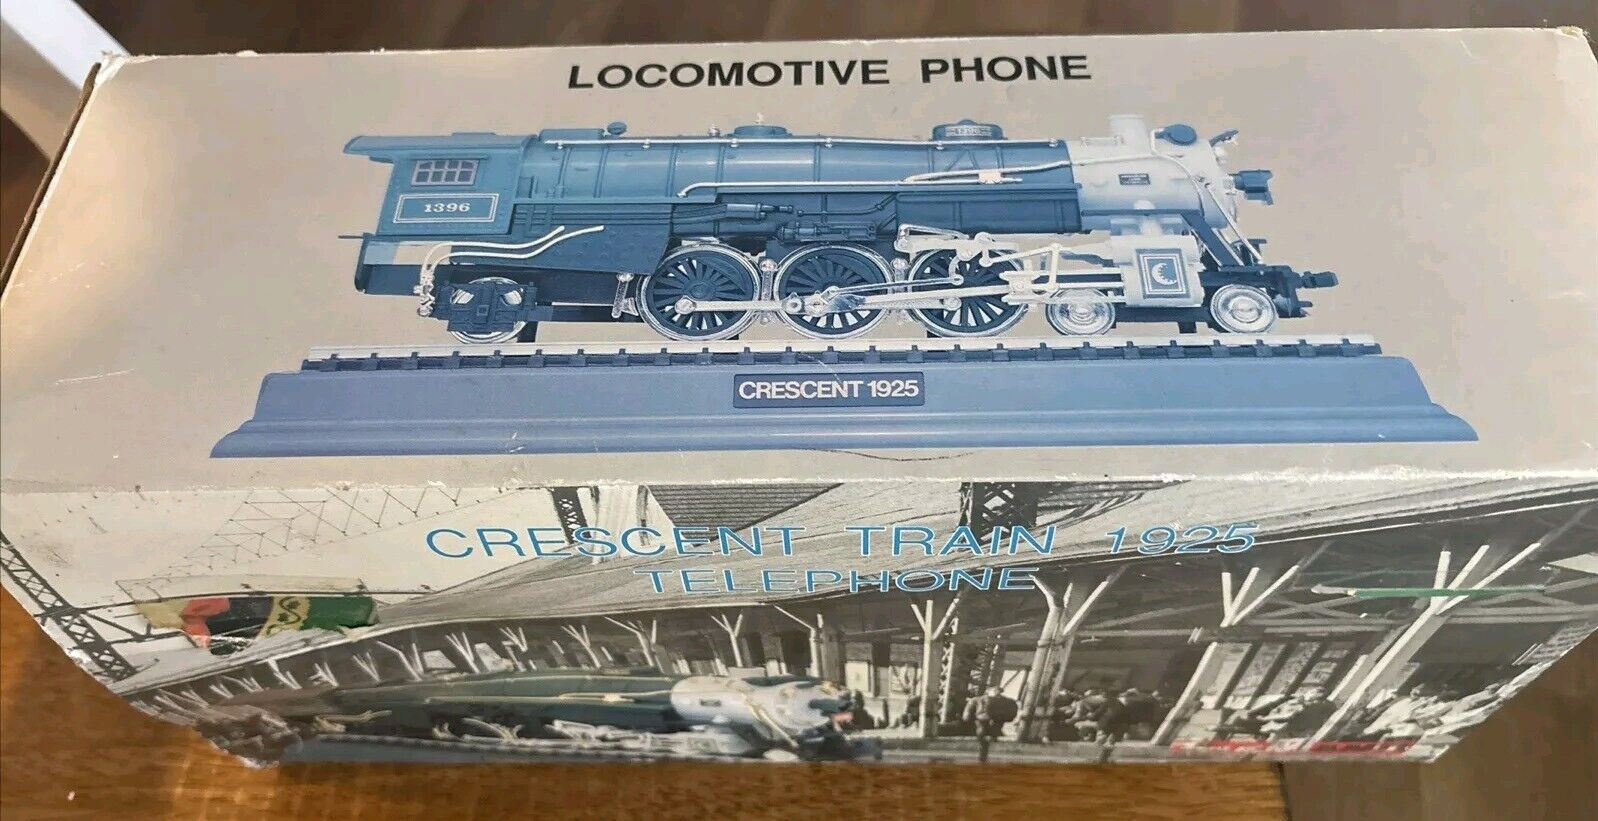 Vintage TeleMania Locomotive Phone Crescent Train 1925 Telephone New Open Box